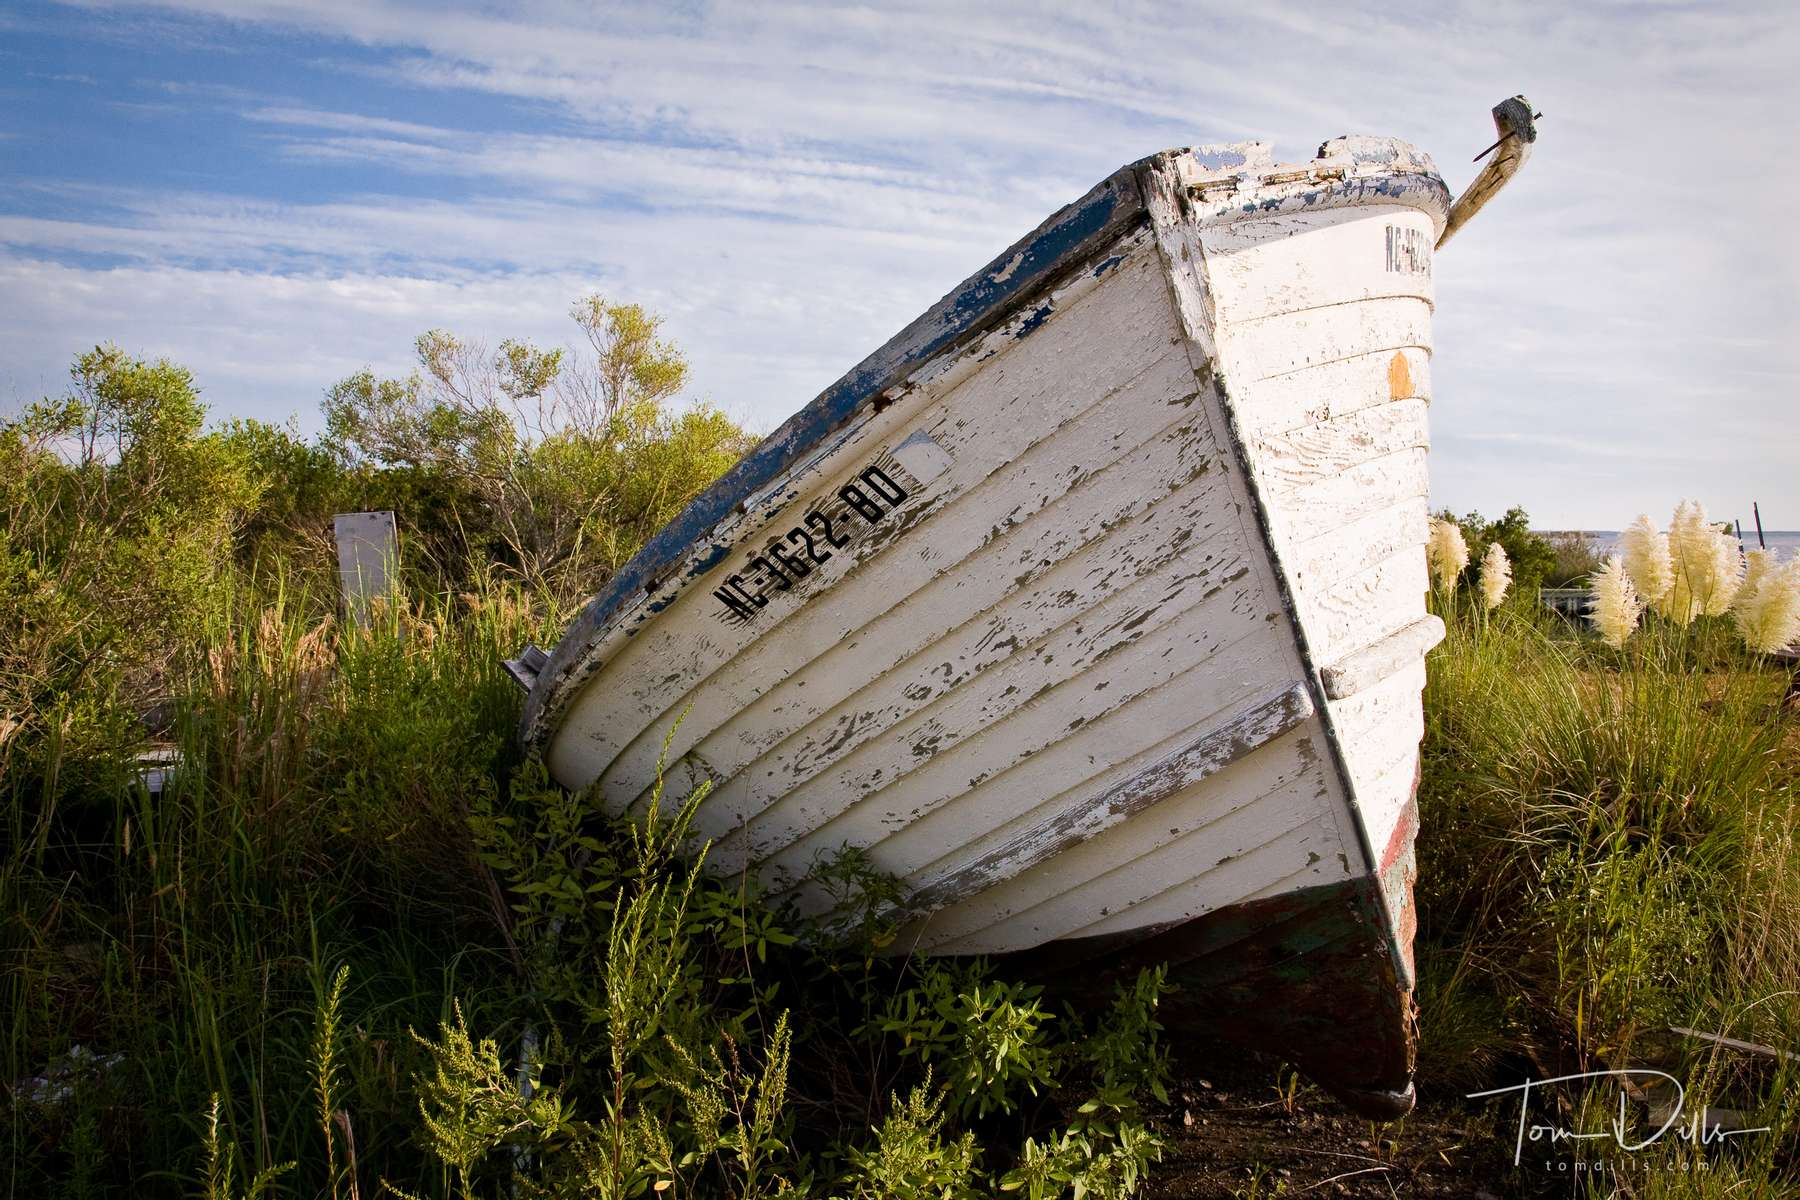 Abandoned boat on Stumpy Point, North Carolina